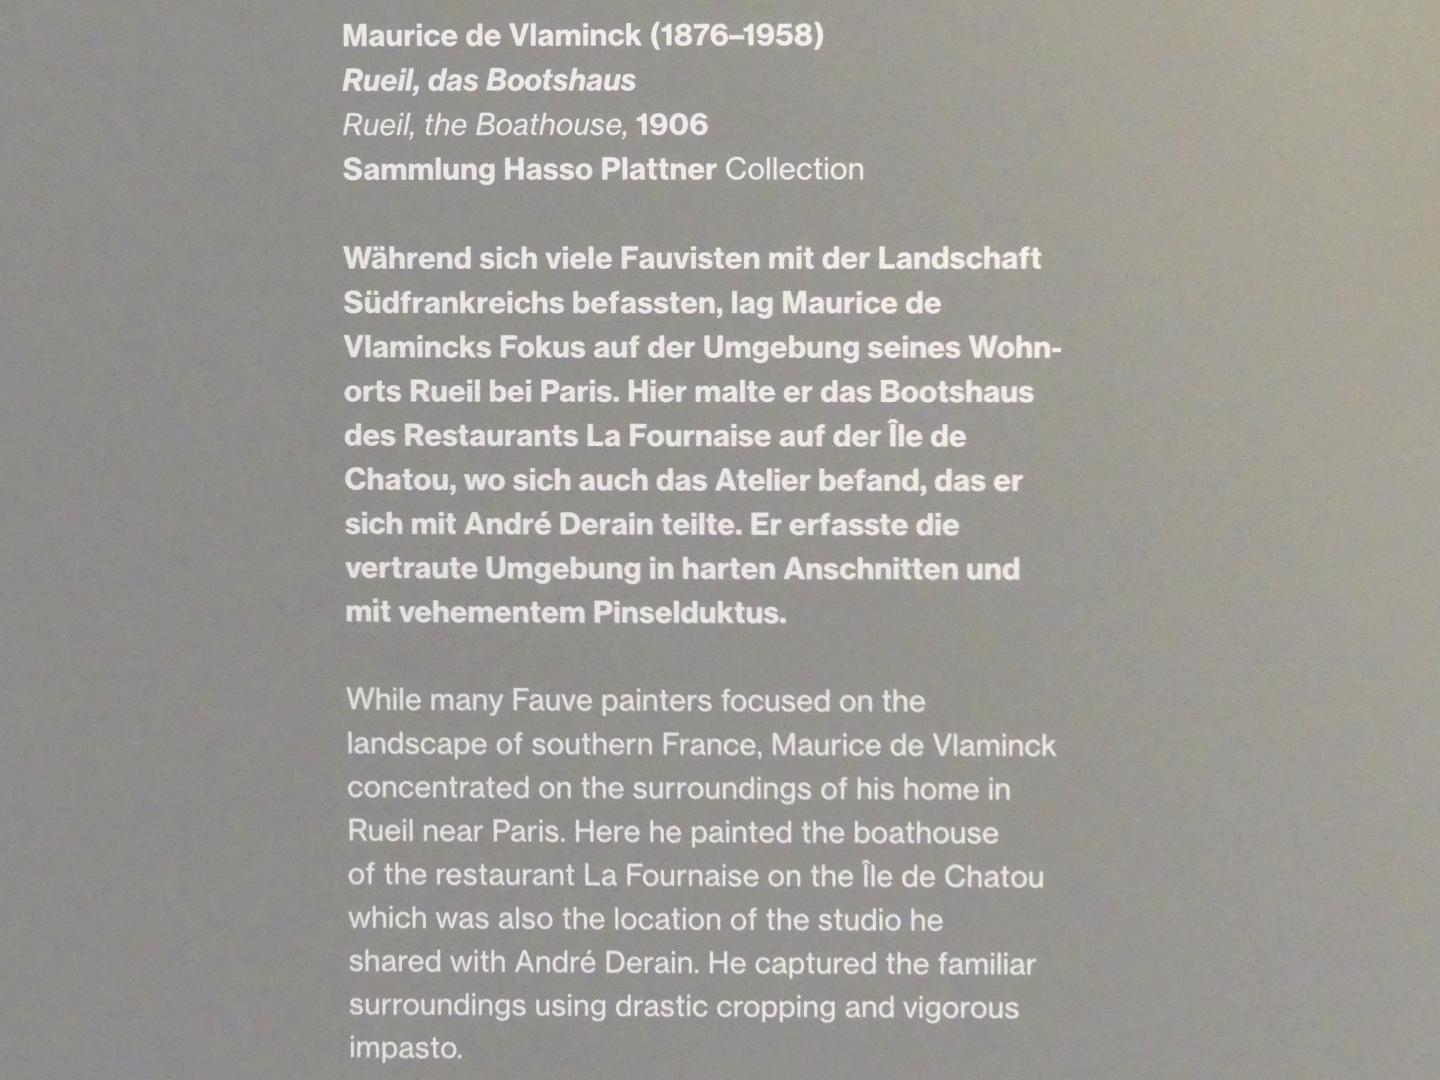 Maurice de Vlaminck (1905–1930), Rueil, das Bootshaus, Potsdam, Museum Barberini, Saal A7, 1906, Bild 2/2